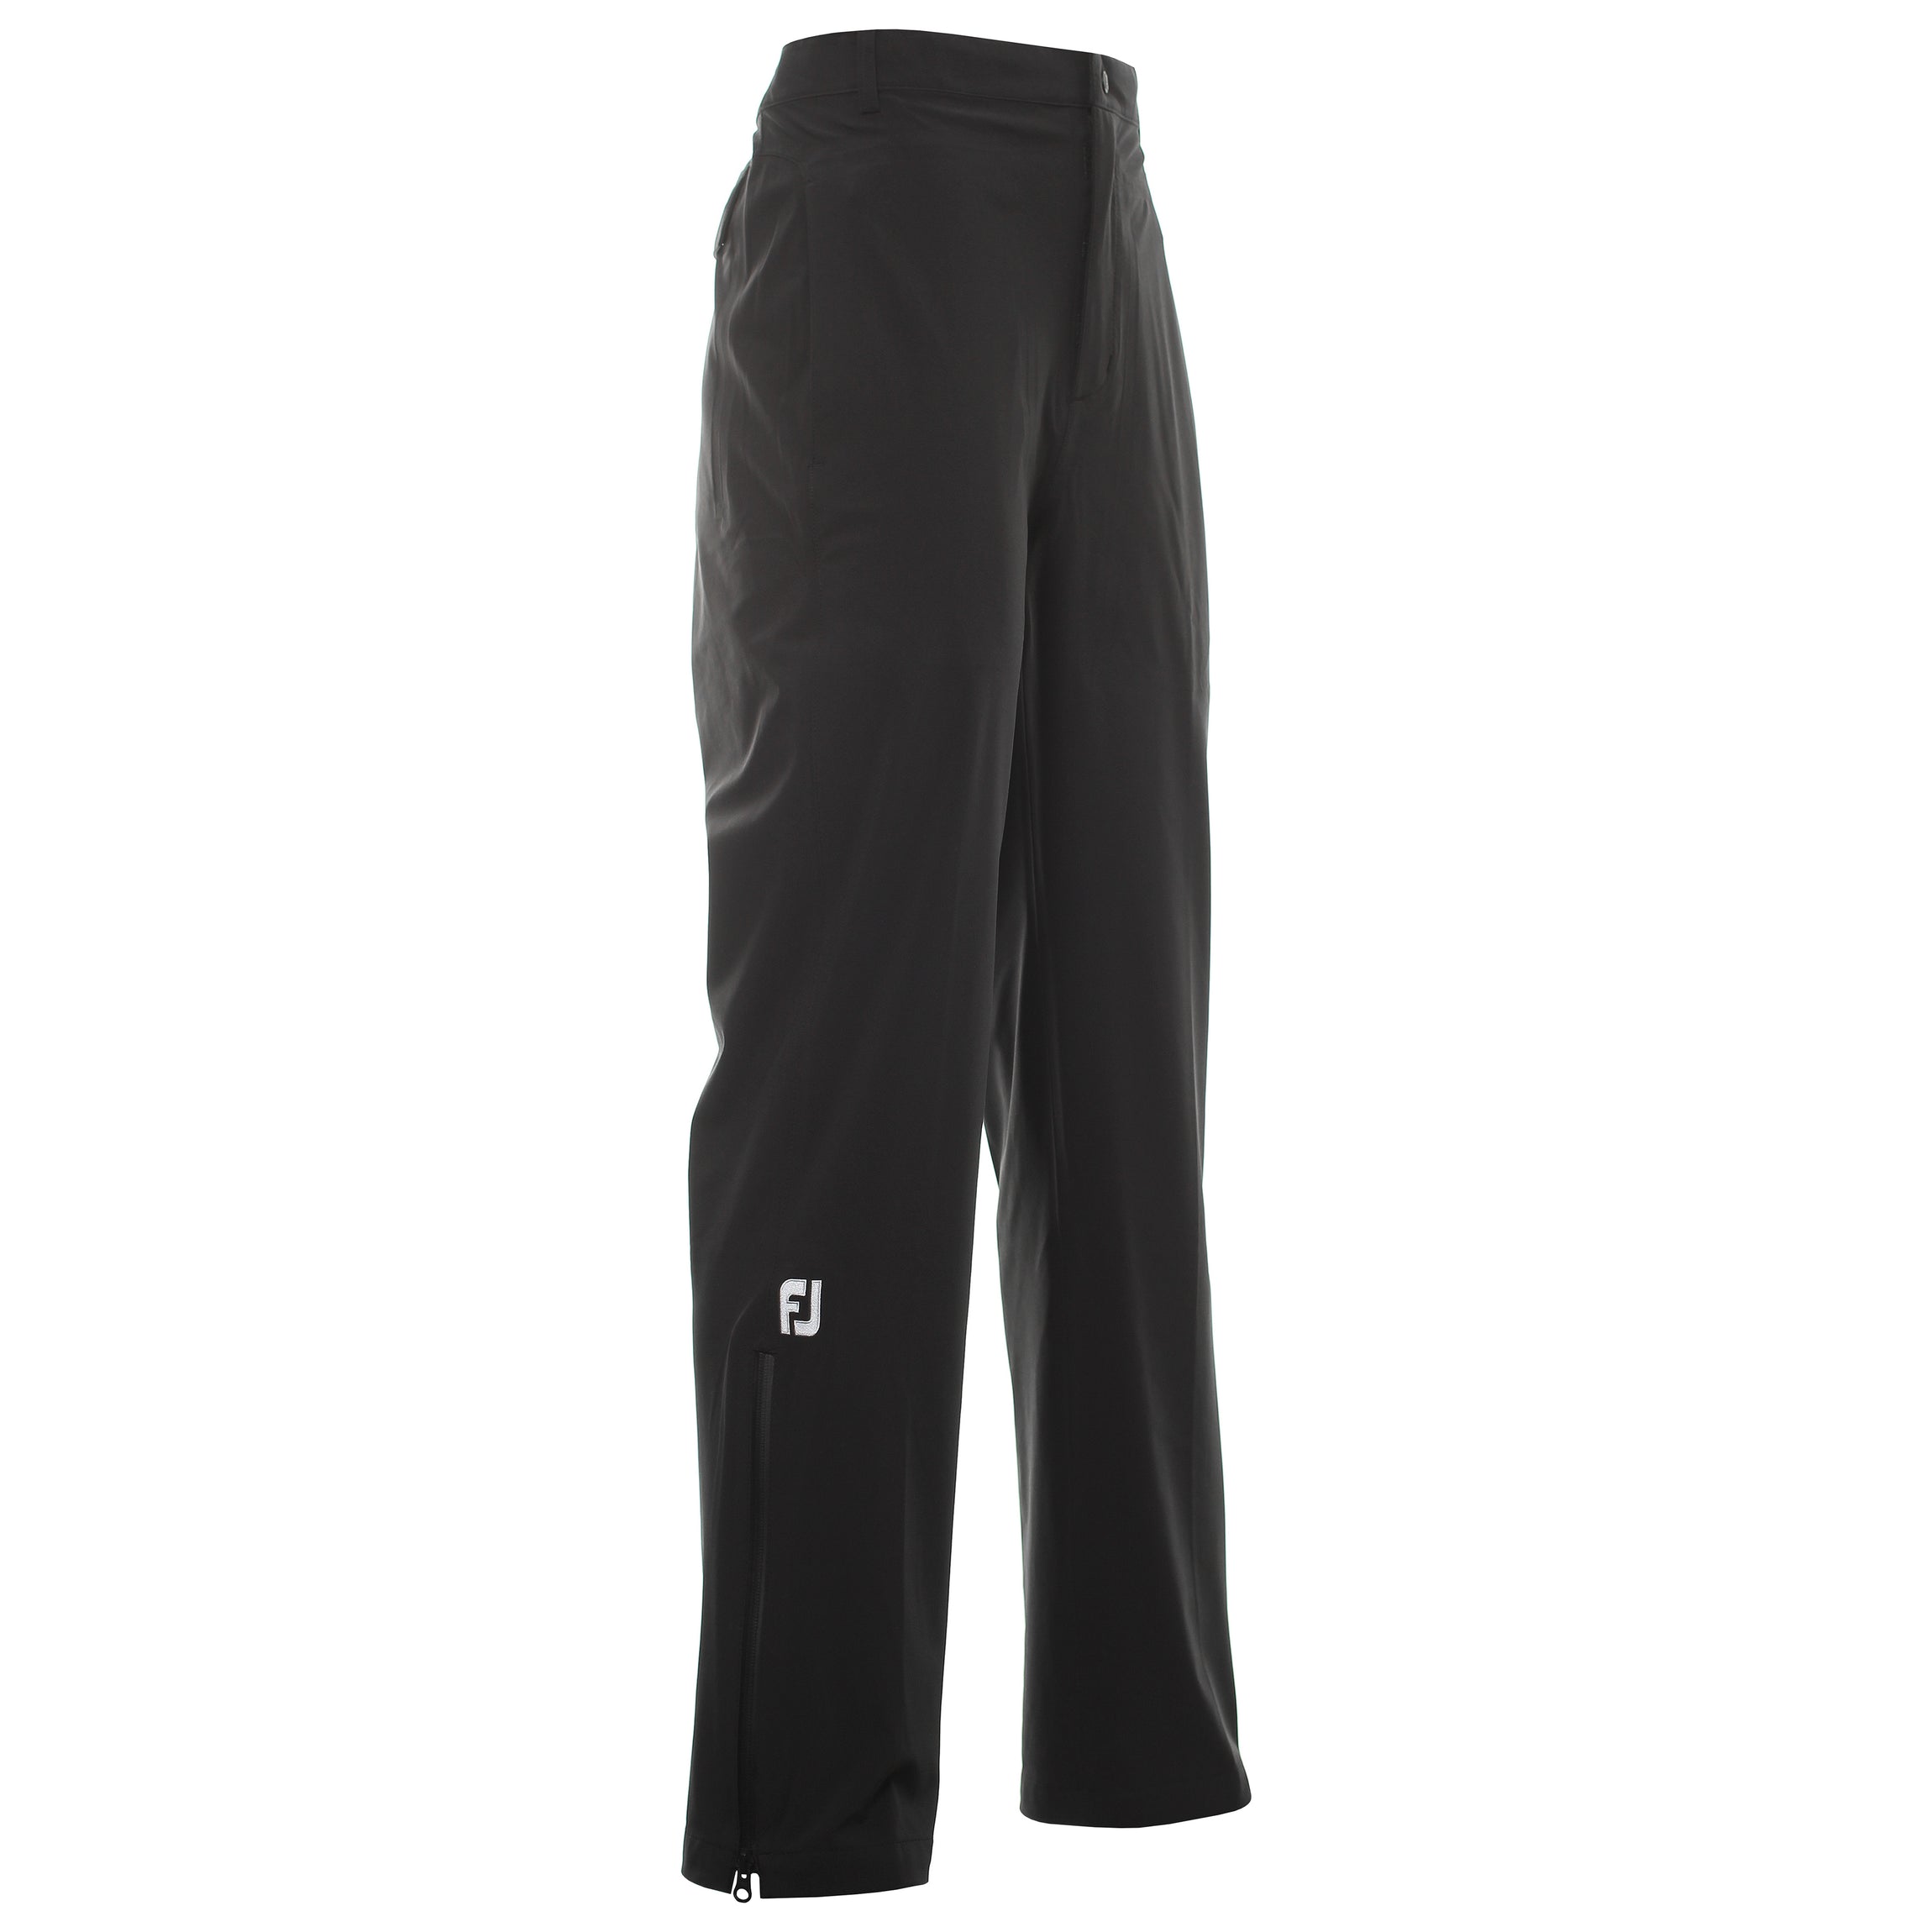 FootJoy Par Golf Trouser Black - Clothing from Gamola Golf Ltd UK